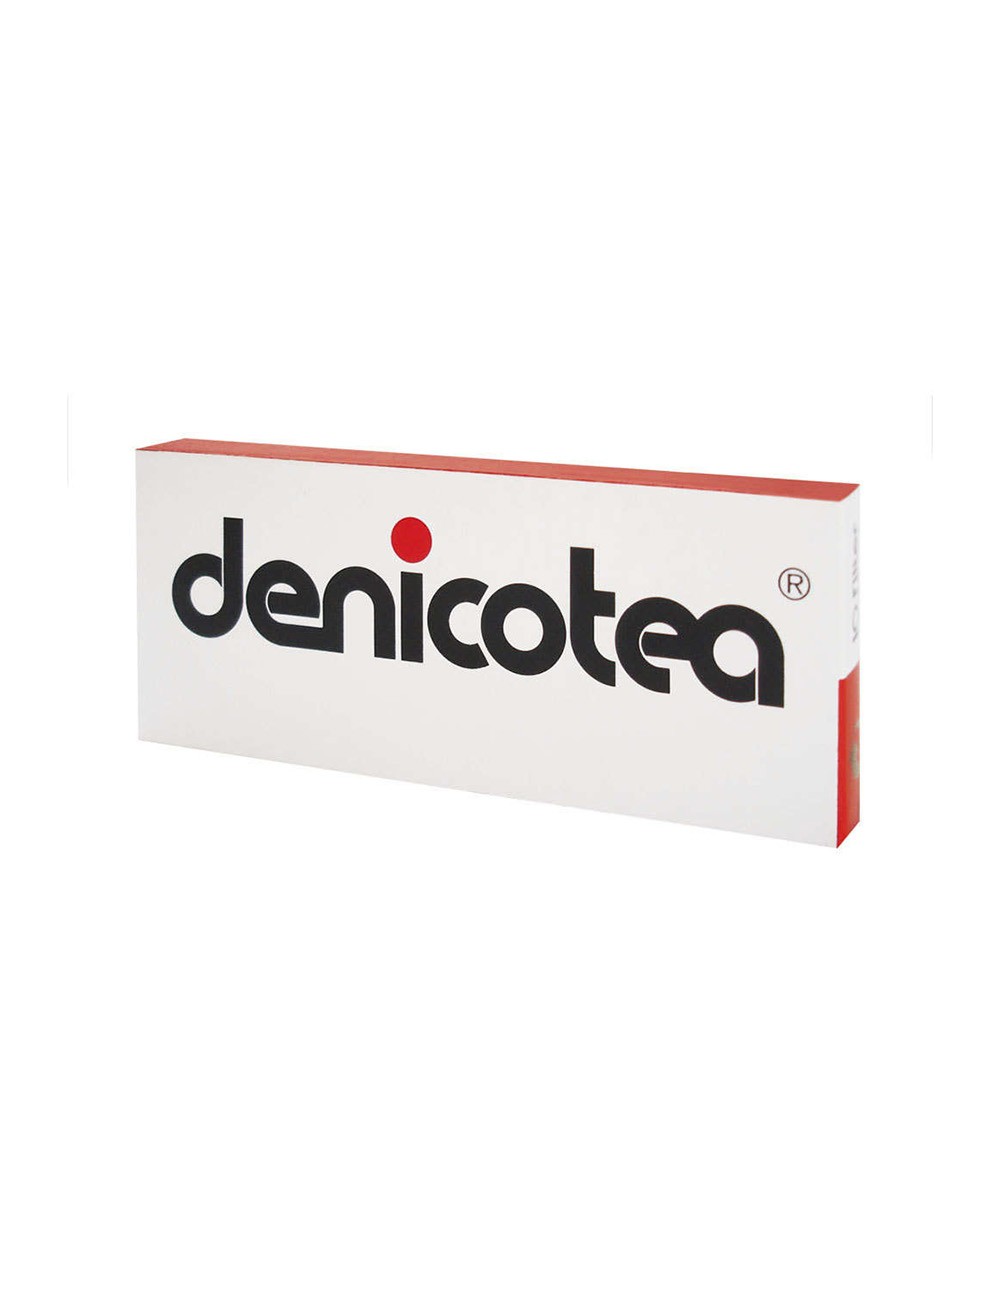 Denicotea Standart Filter